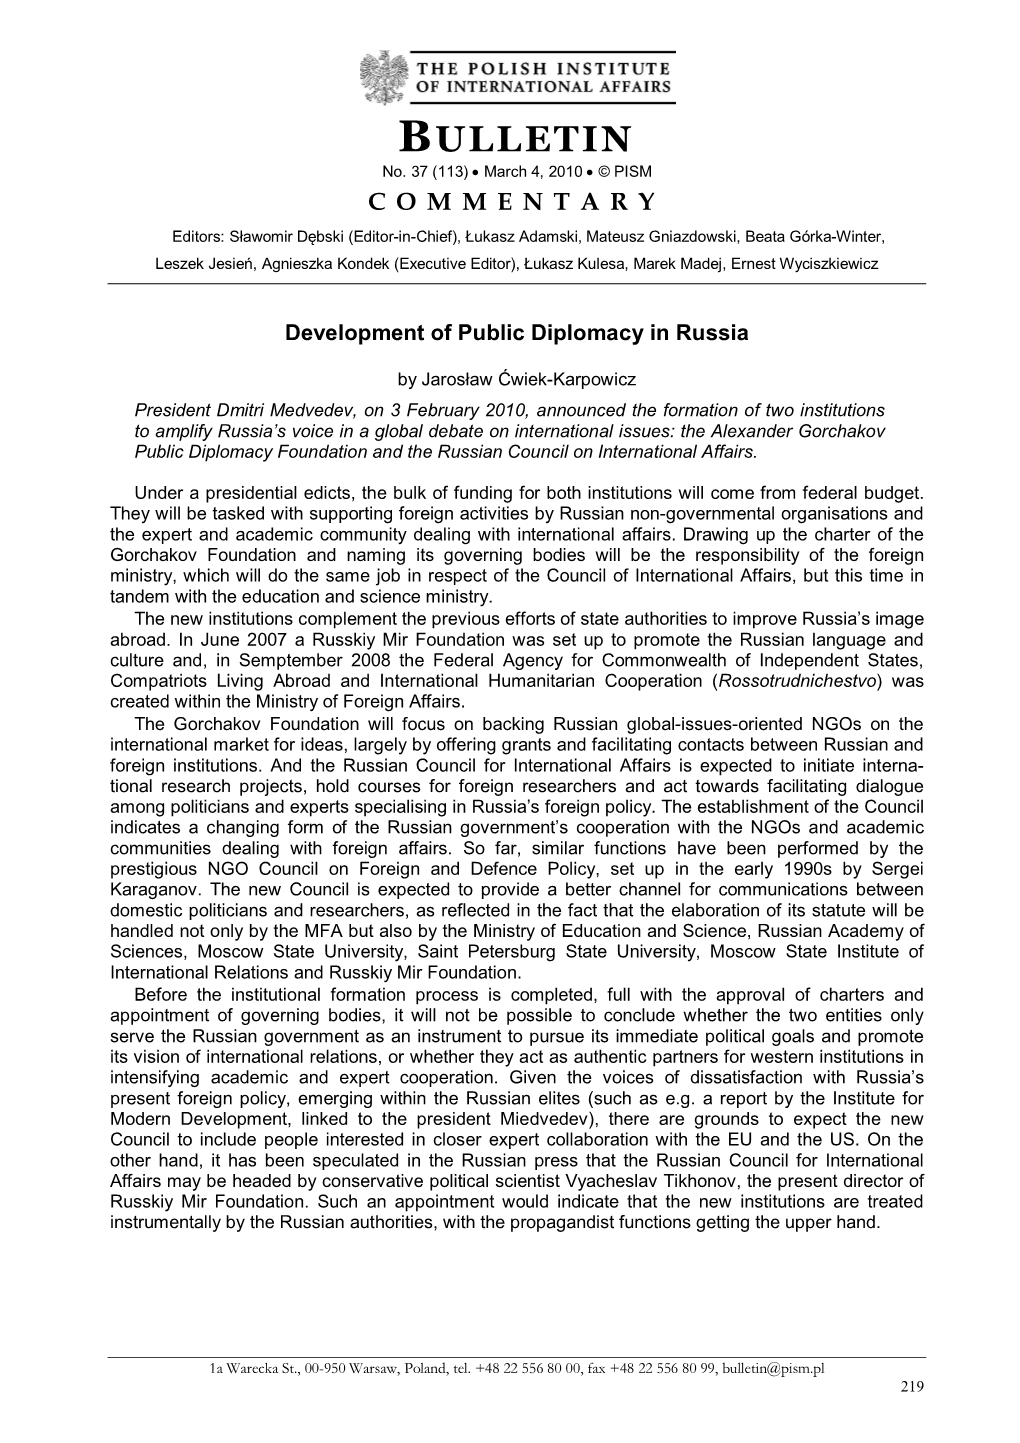 Development of Public Diplomacy in Russia